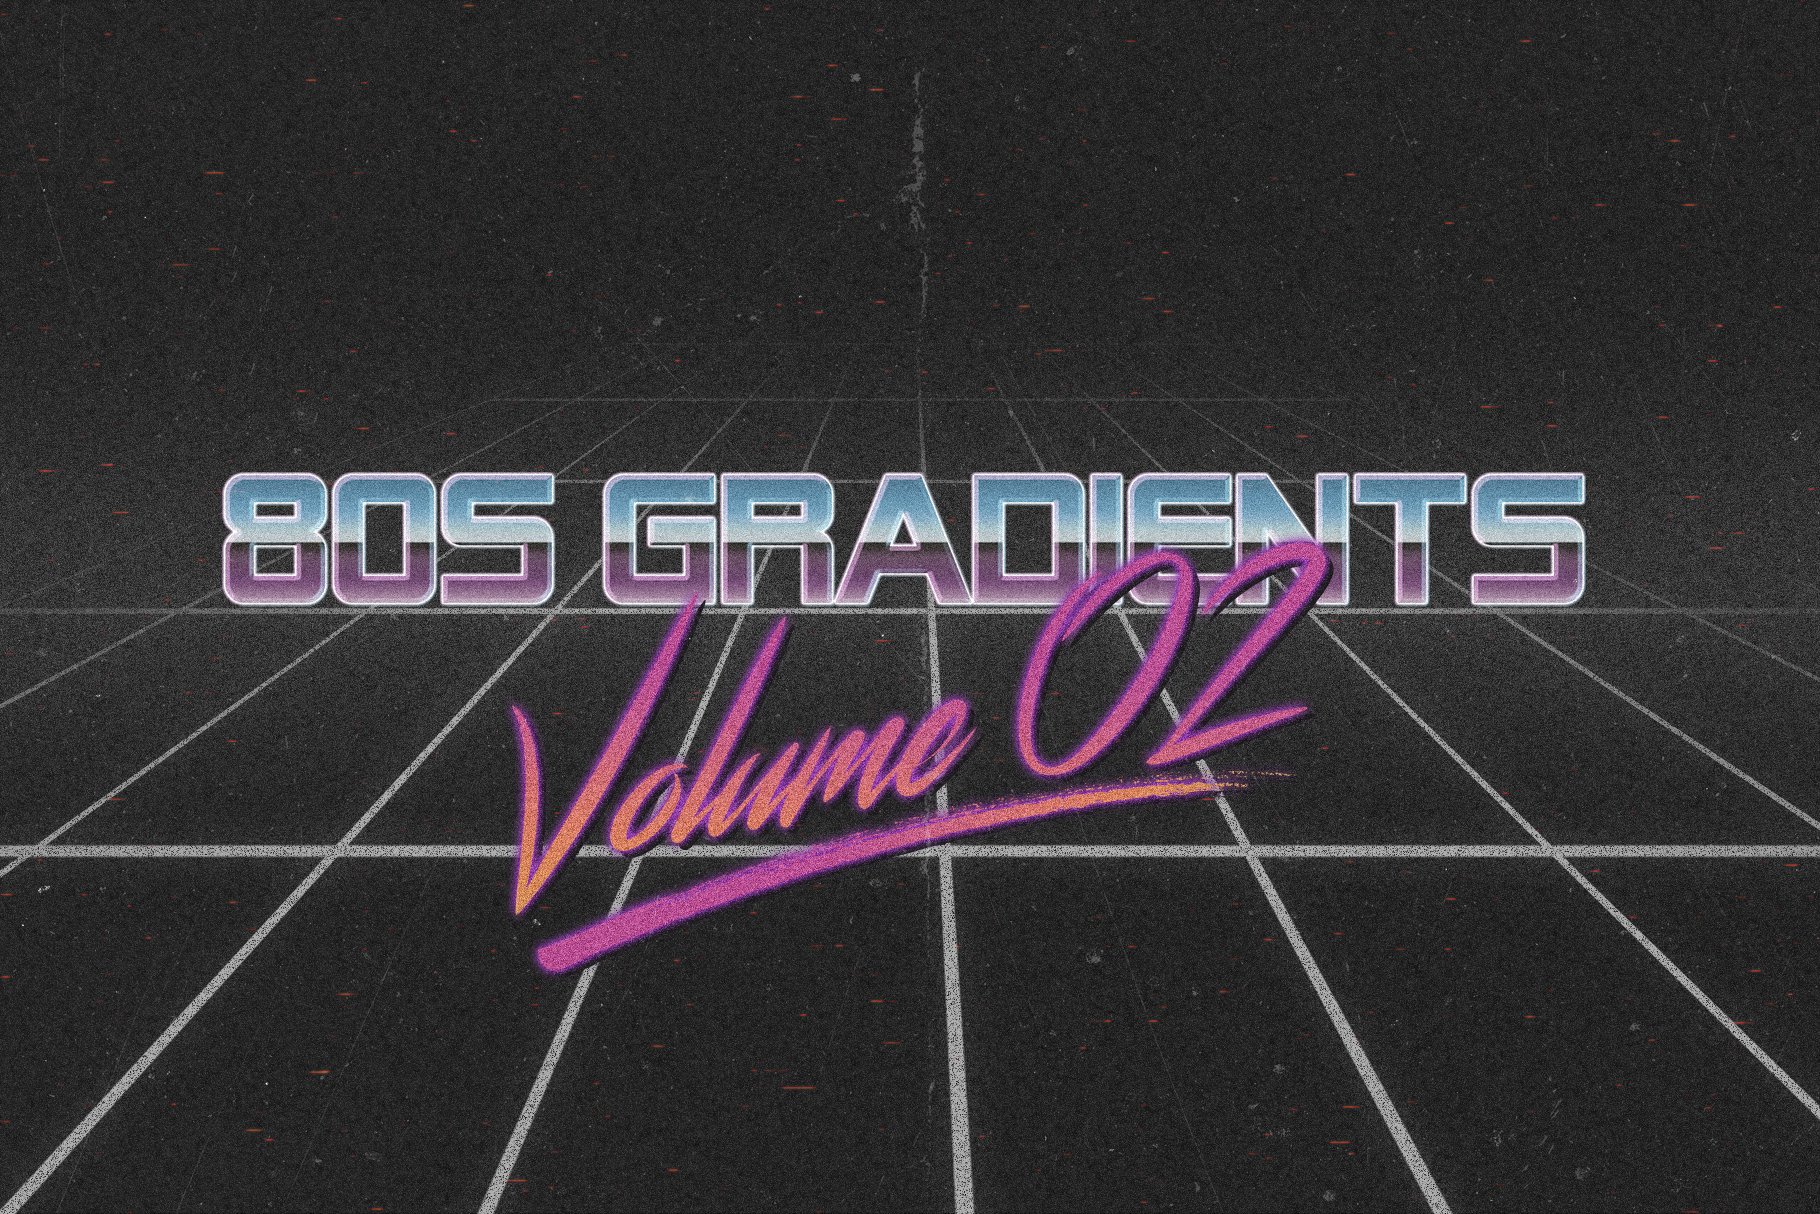 80s Gradients Vol.02cover image.